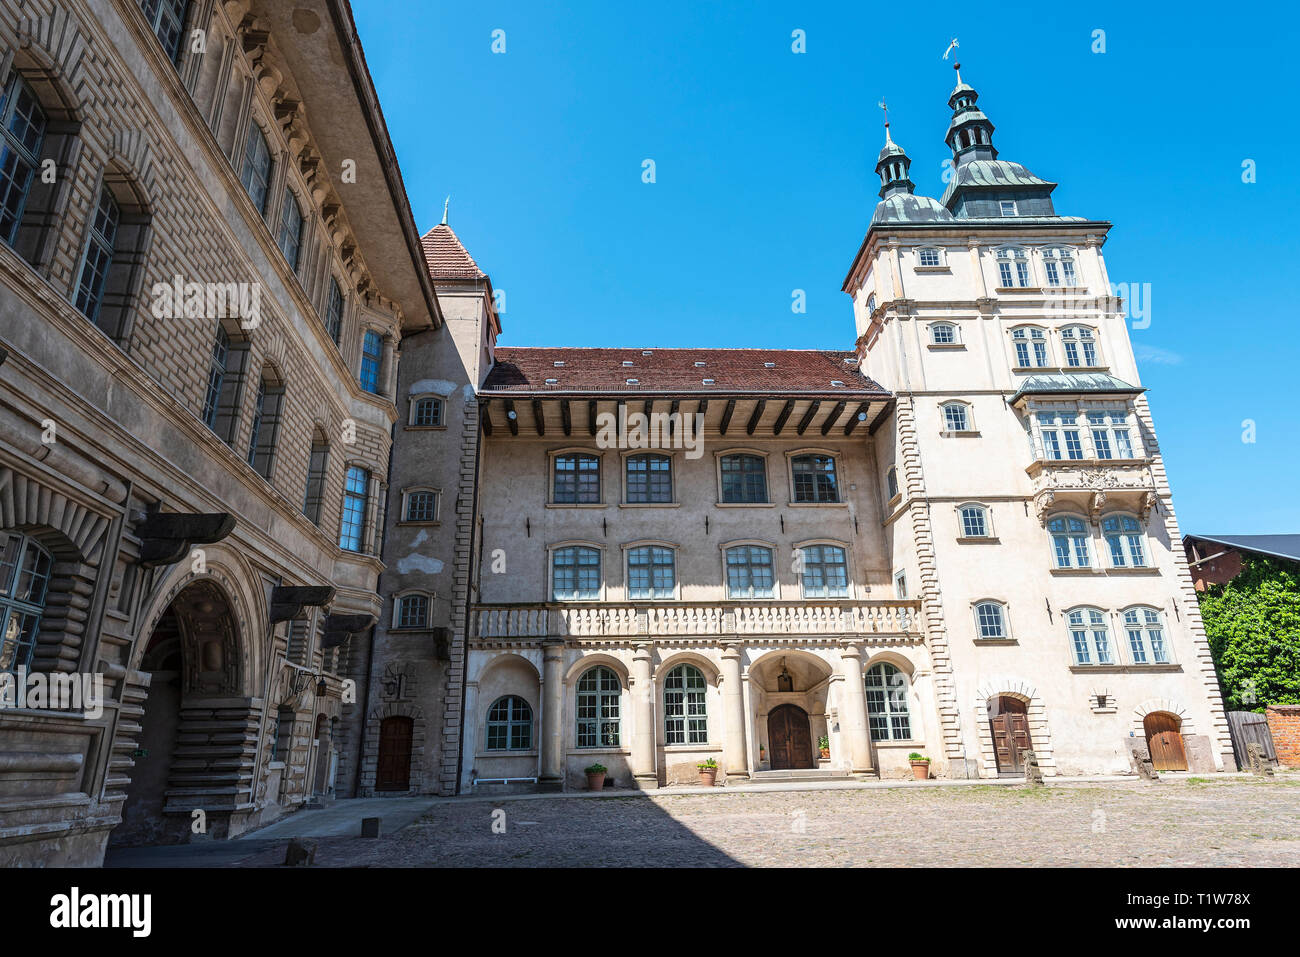 Castello, edificio rinascimentale, Guestrow, Meclemburgo-Pomerania, Germania Foto Stock